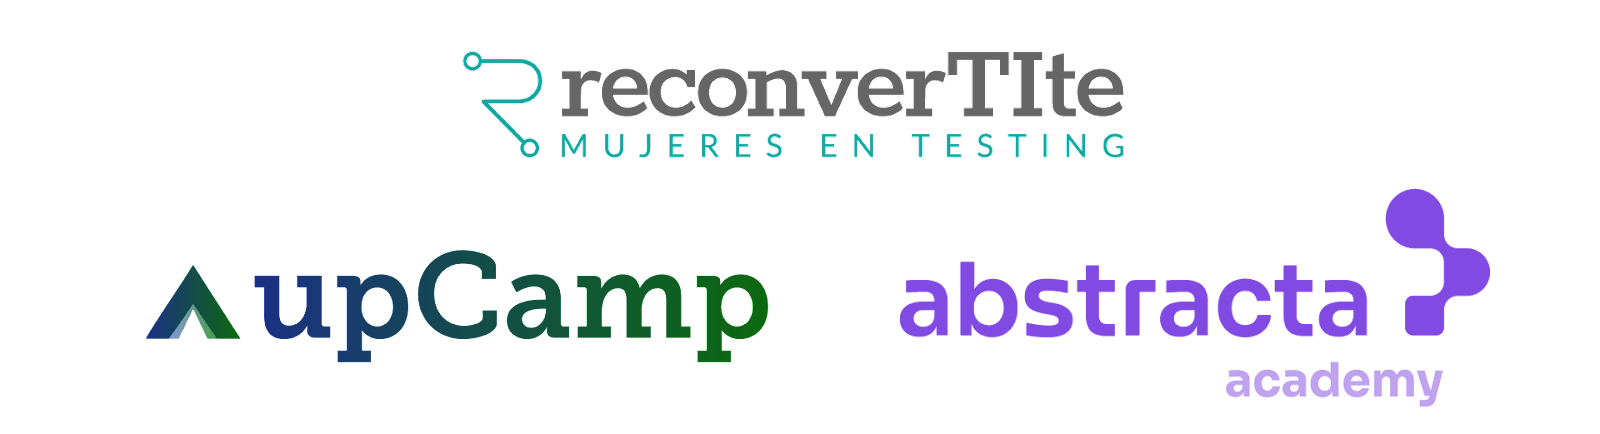 ReconverTIte: Mujeres en TestingupCampabstracta academy